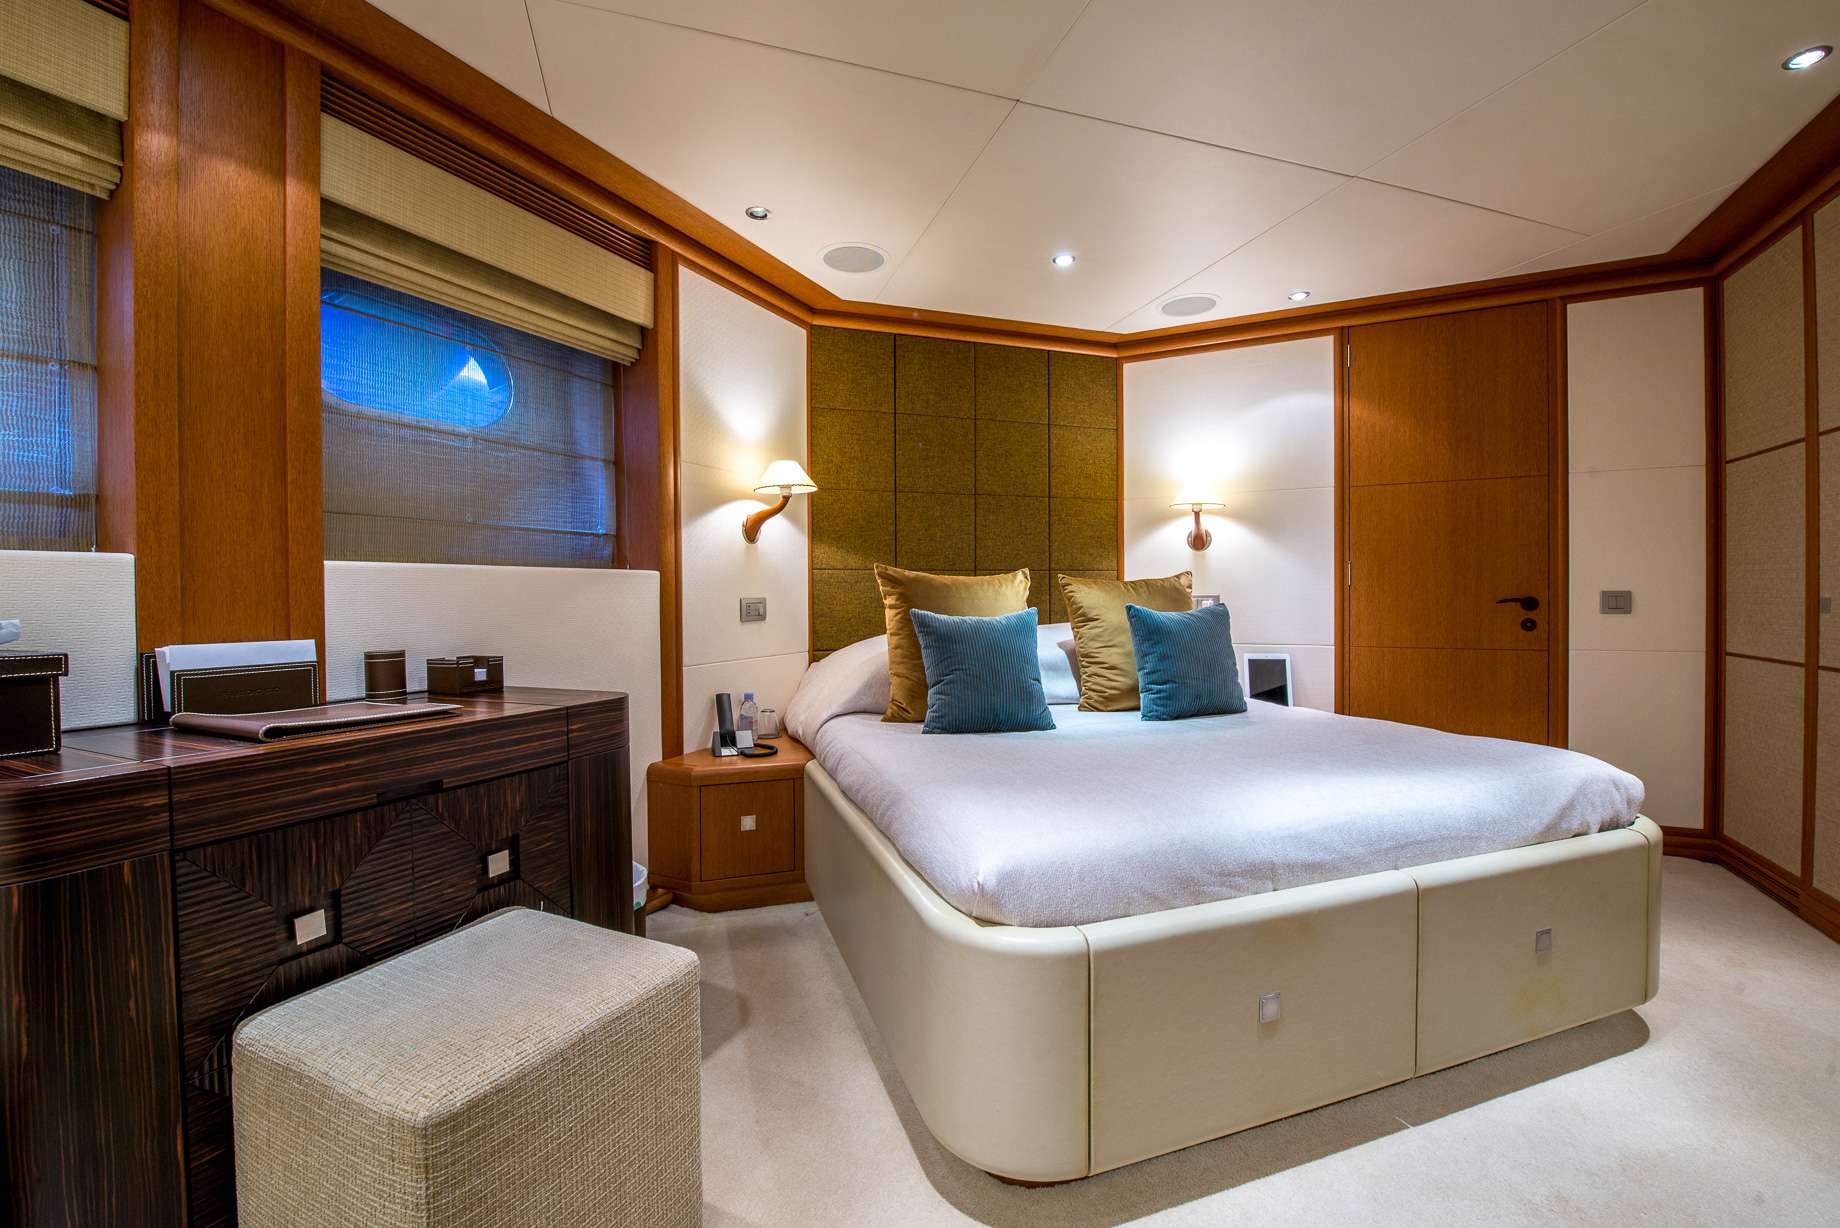 Motor Yacht 'SIROCCO' Guest cabin, 12 PAX, 154.00 Ft, 47.00 Meters, Built 2006, Heesen, Refit Year 2015